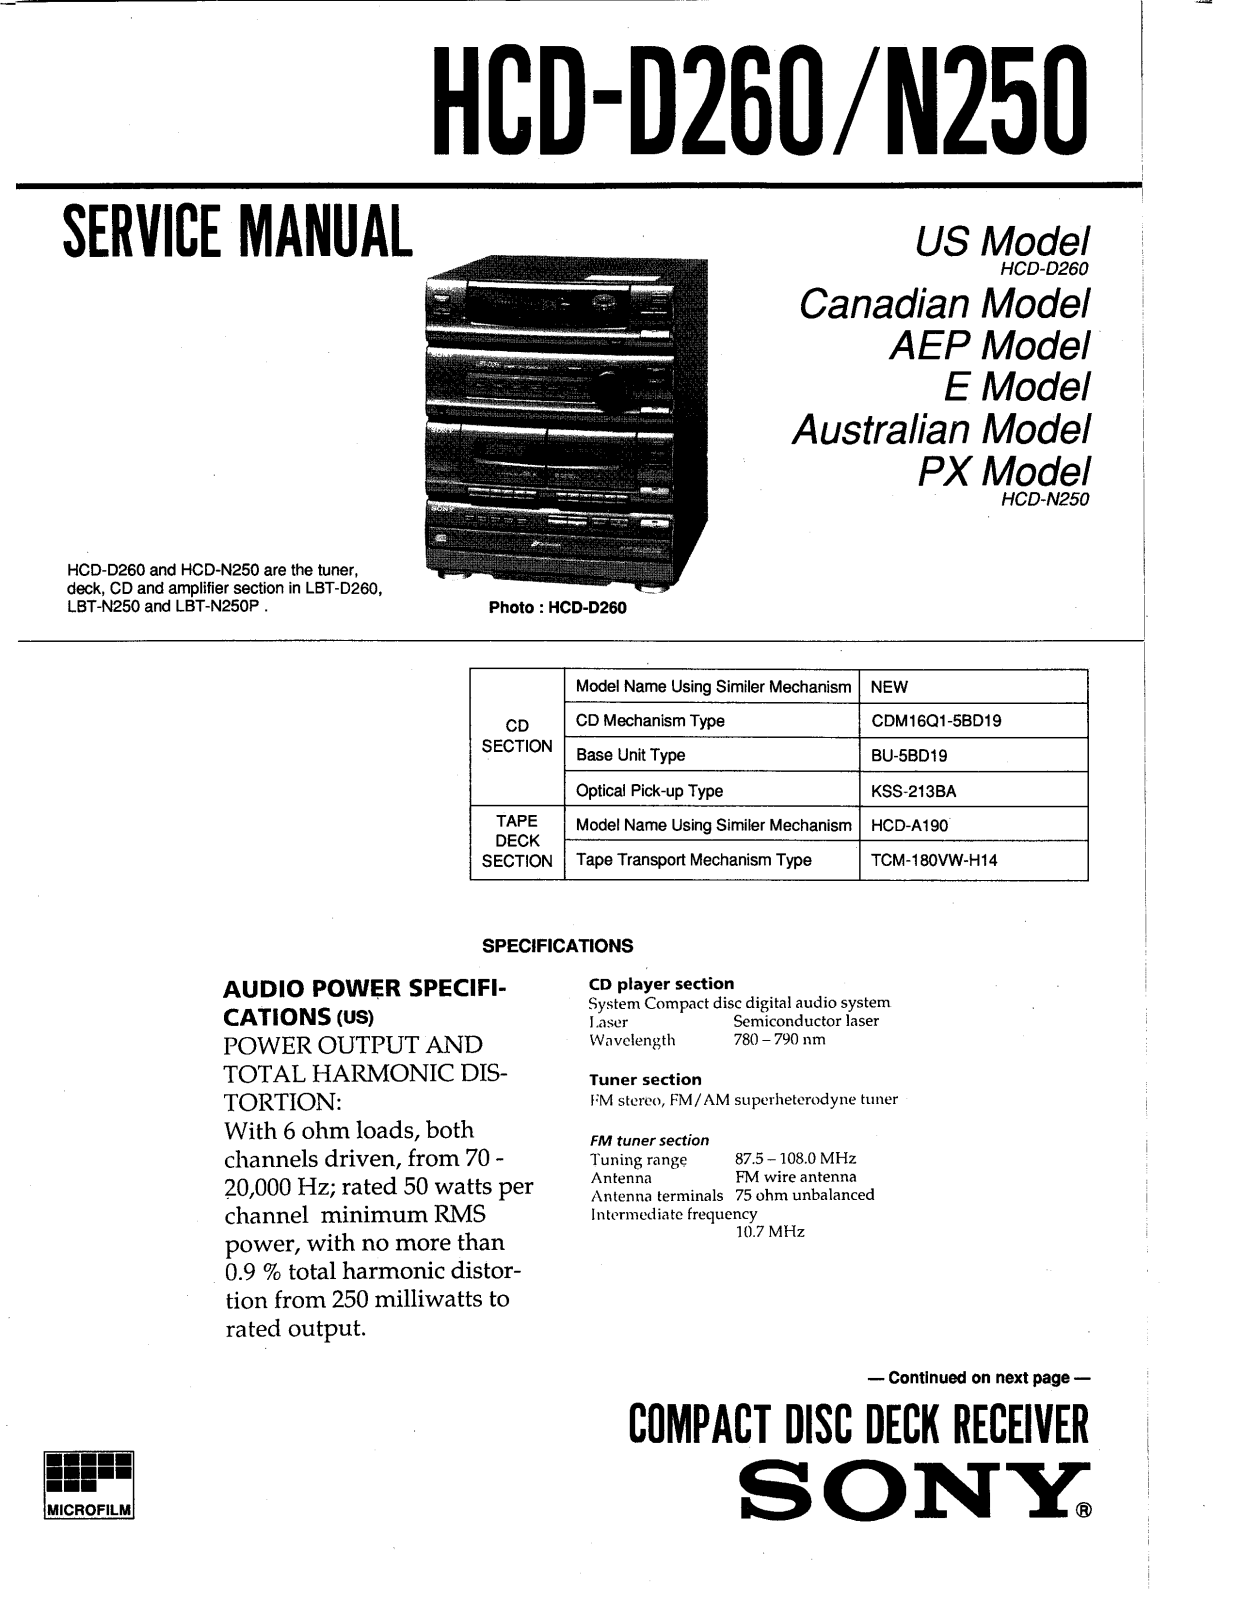 SONY HCD N250, HCD N260 Service Manual